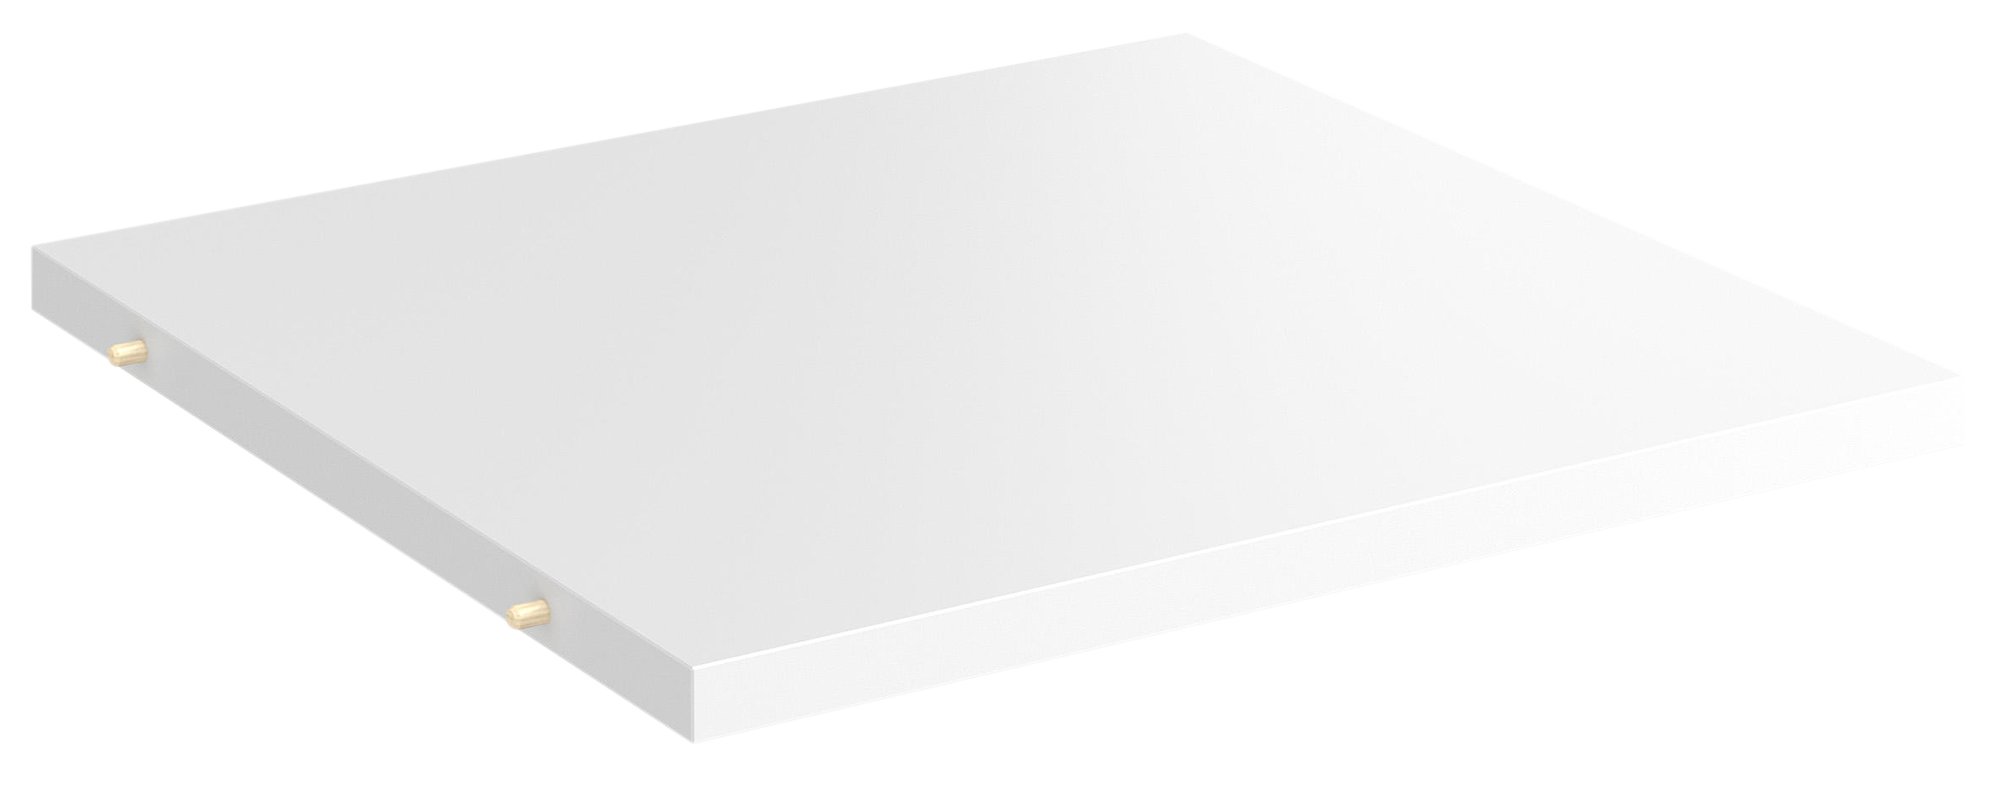 Balda spaceo kub blanco 1.6x32.7x31.5cm